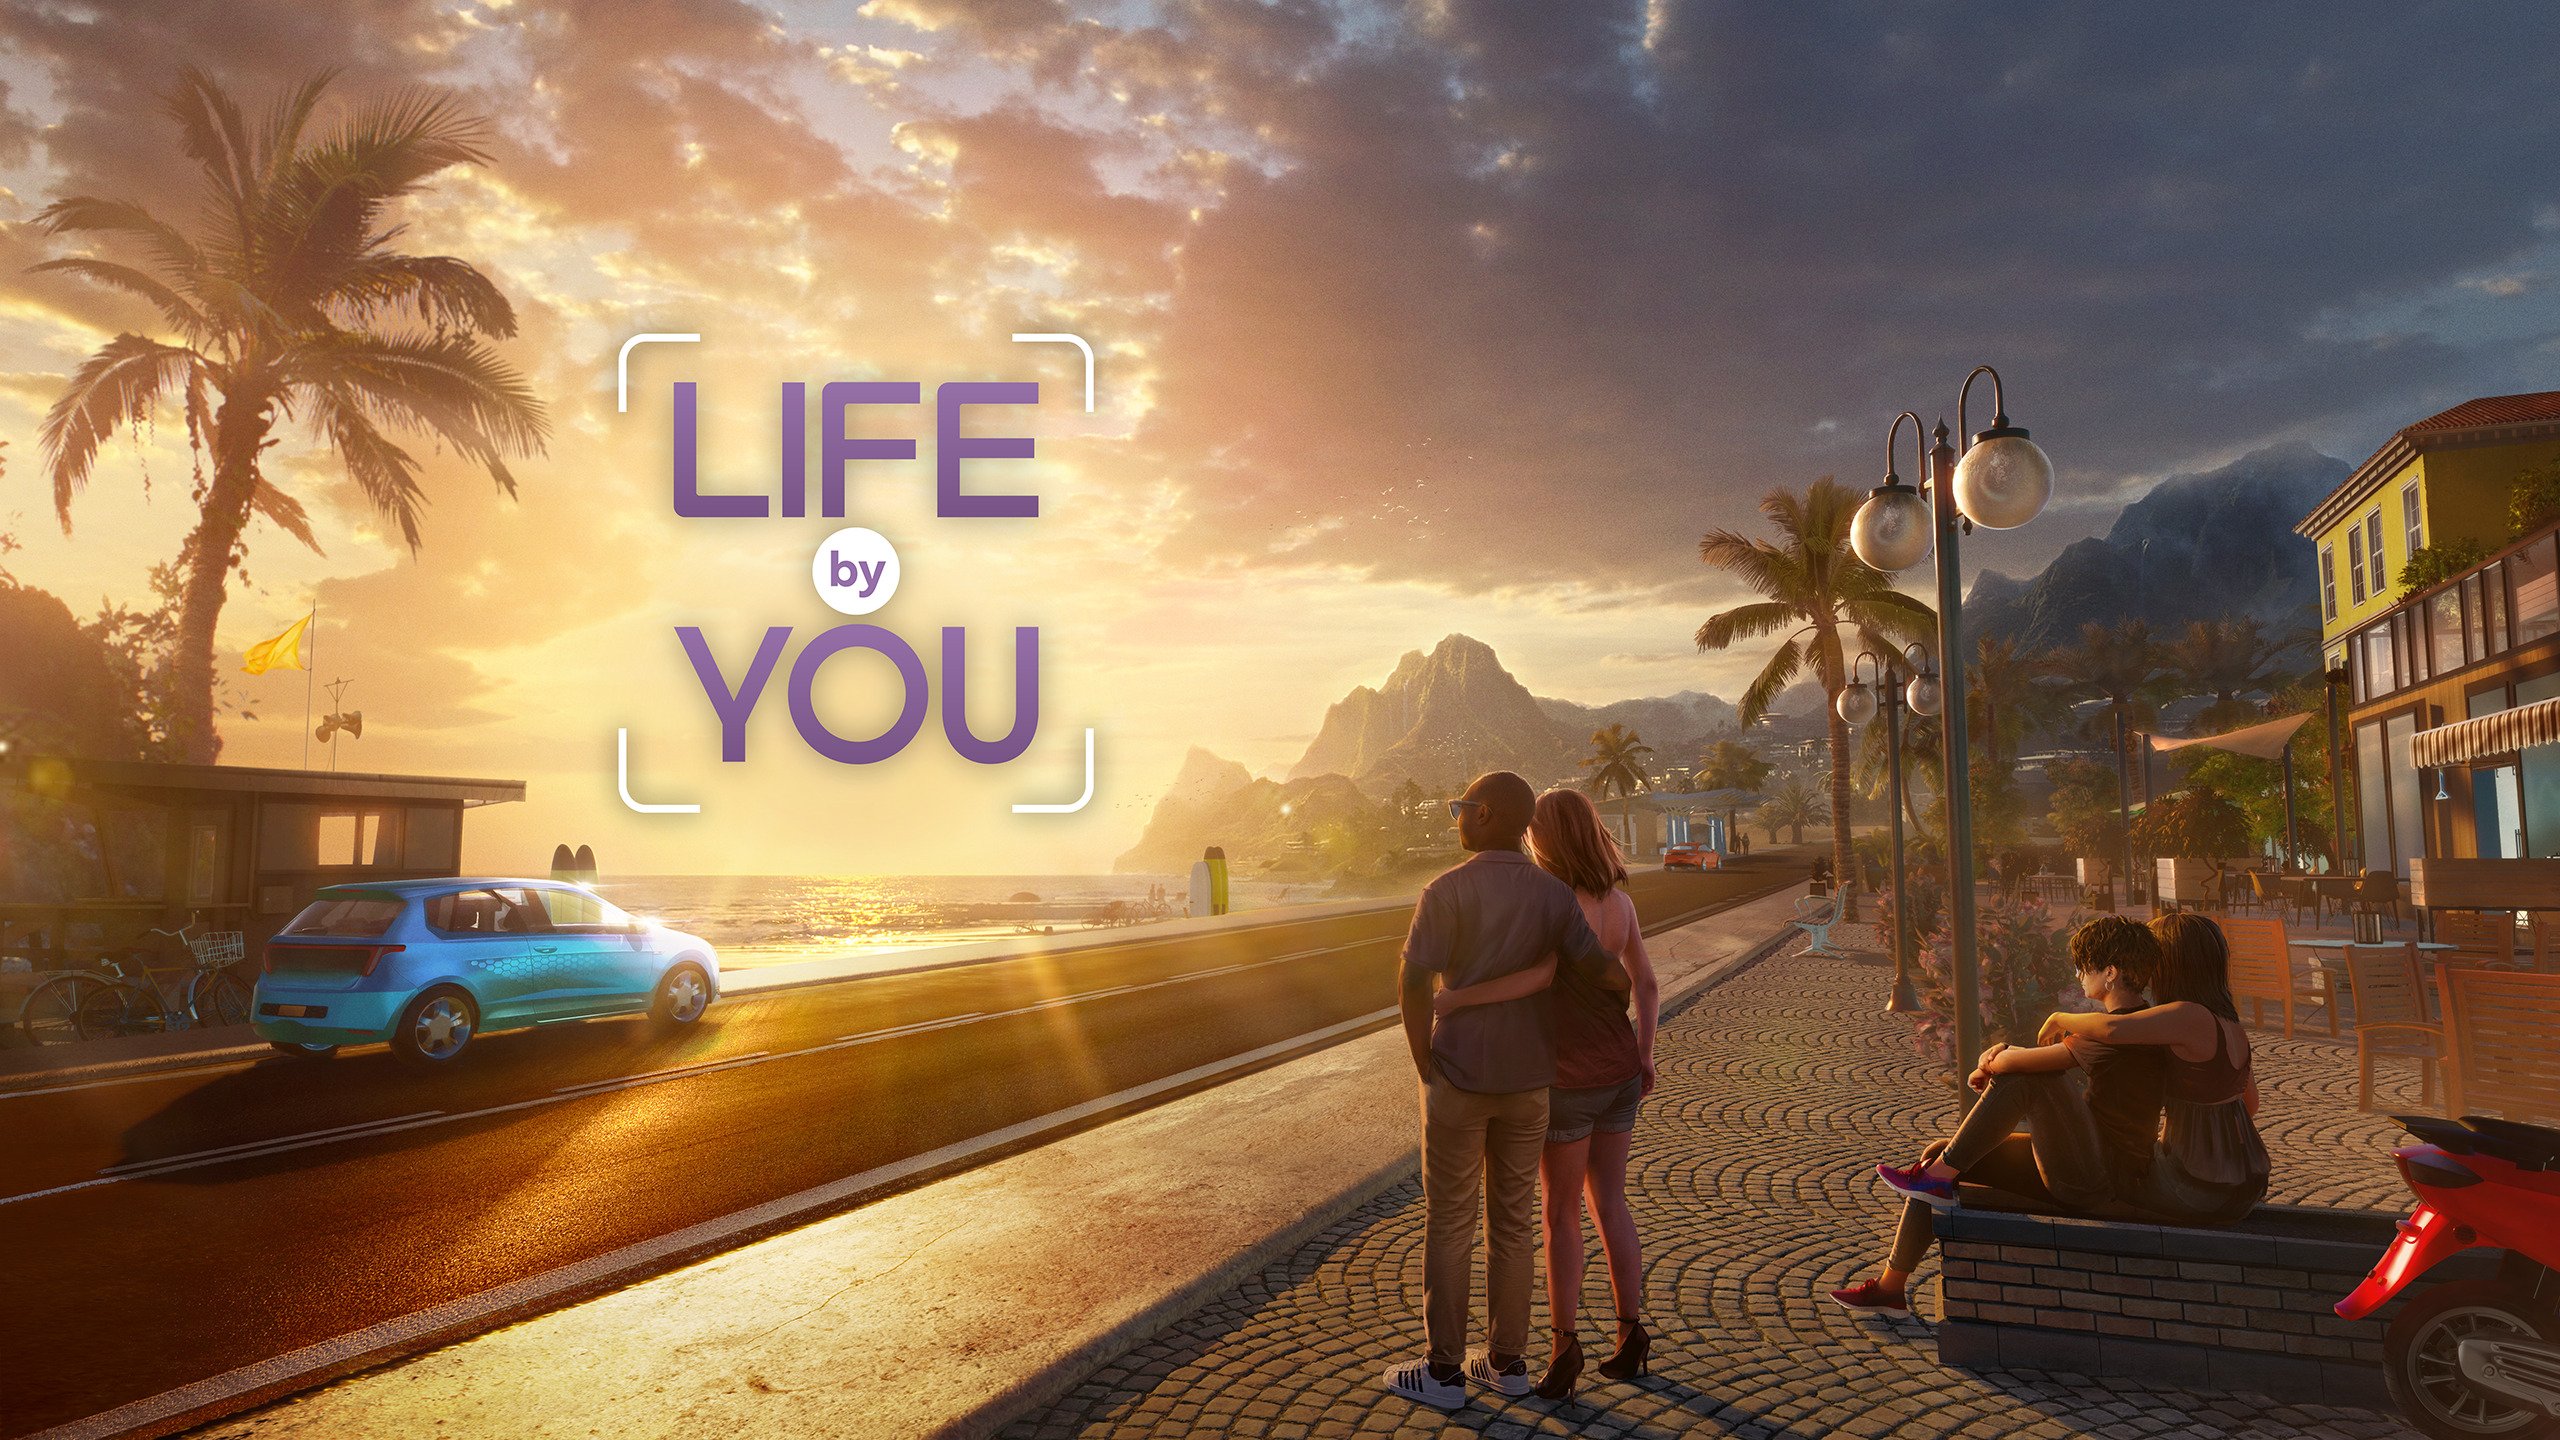 Life by You เกมจำลองใช้ชีวิตจากอดีตทีมผู้สร้าง The Sims 2 เตรียมลงแพลตฟอร์ม PC วันที่ 12 กันยายนปีนี้